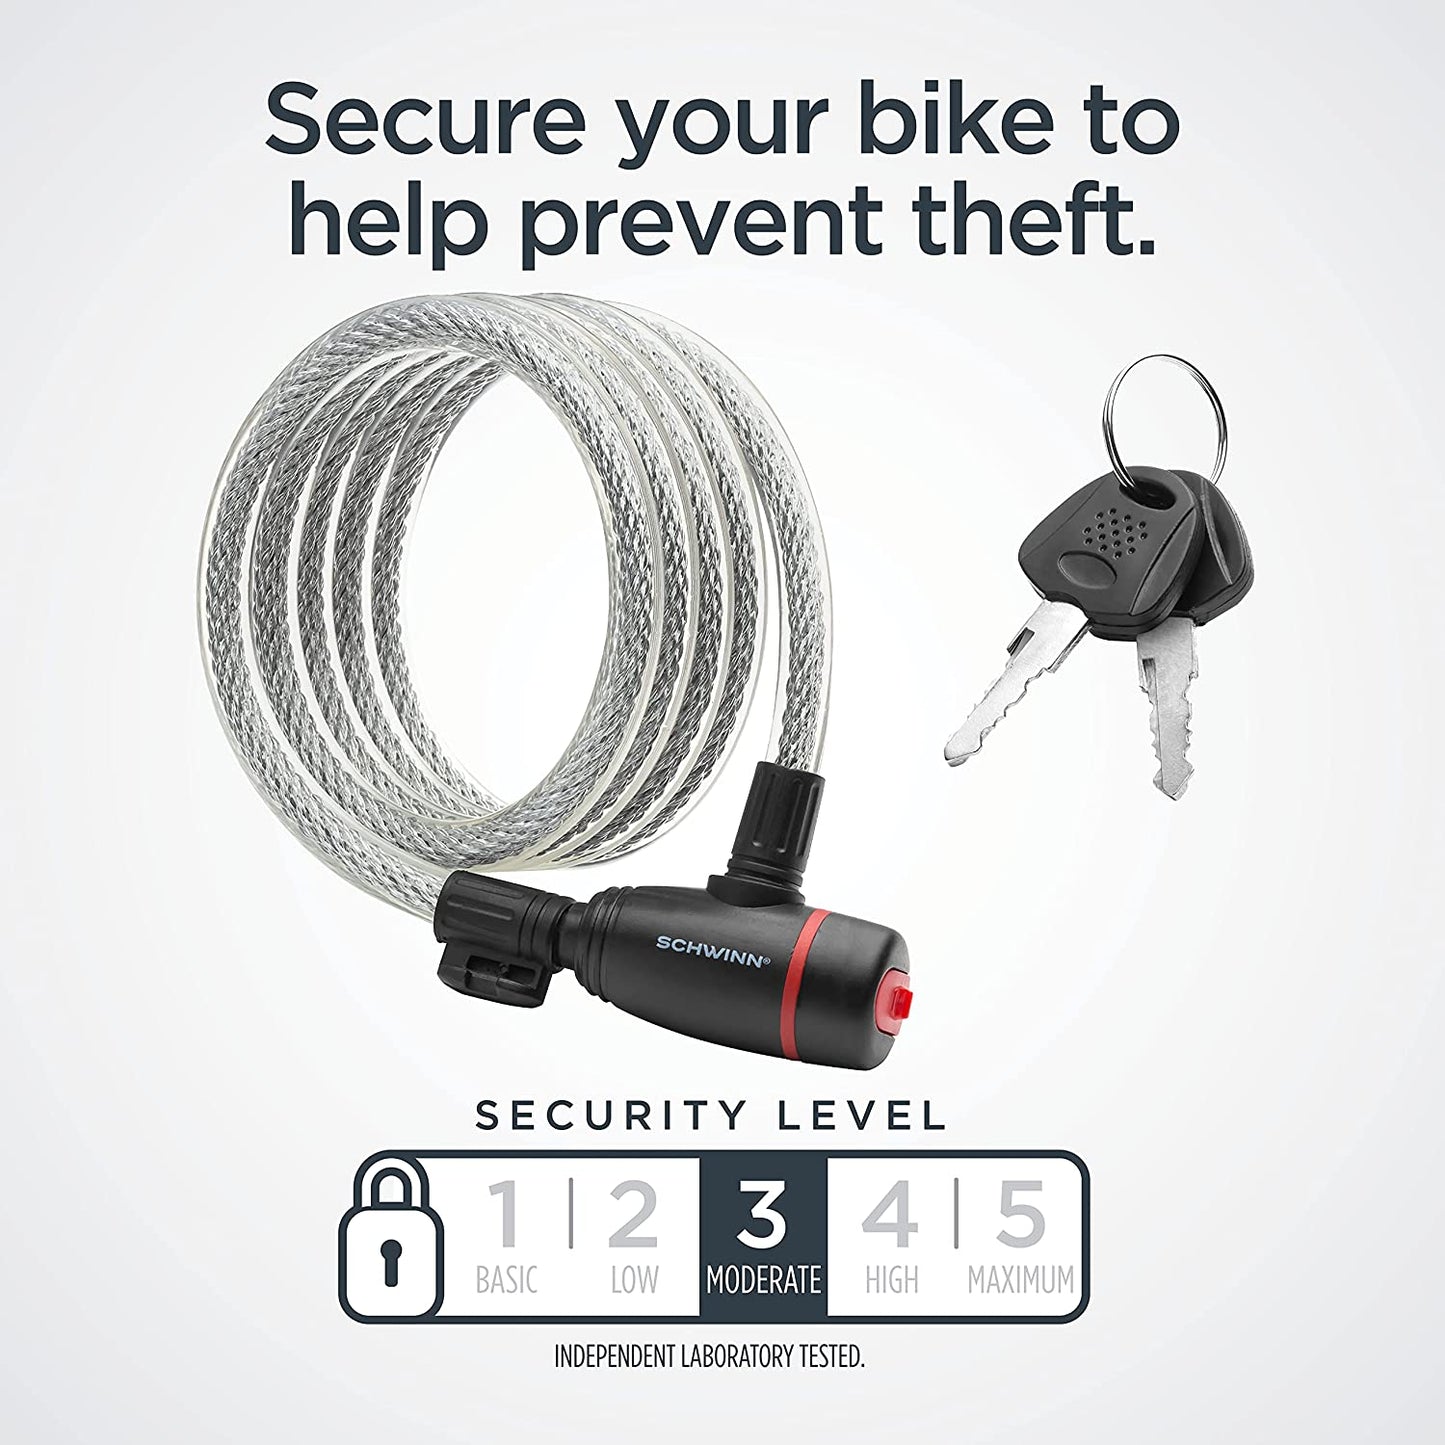 Schwinn Anti Theft Bike Lock, Security Level 1